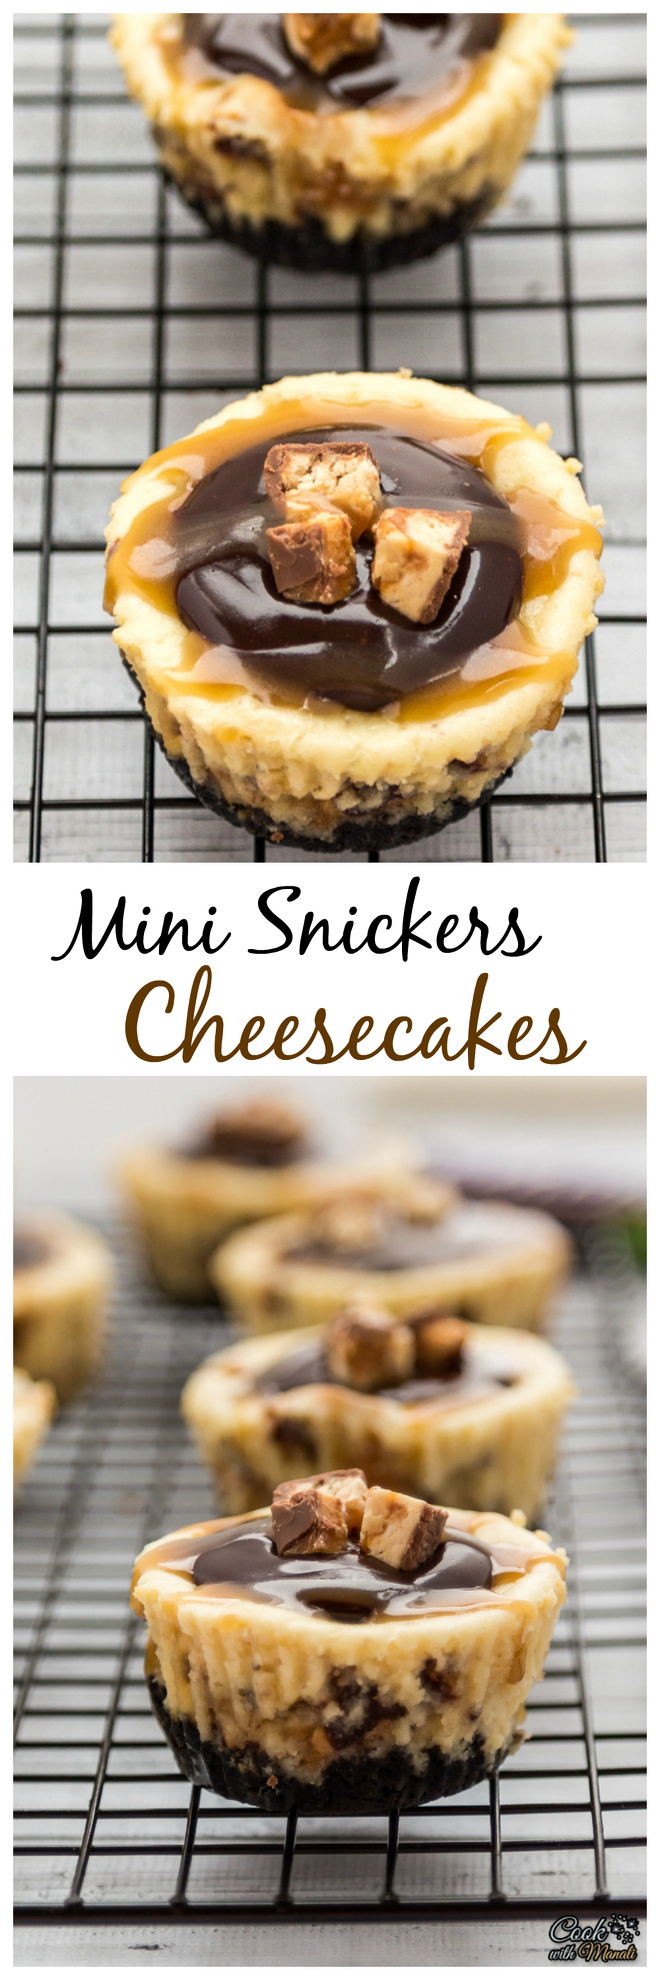 Mini Snickers Cheesecakes-Collage-nocwm